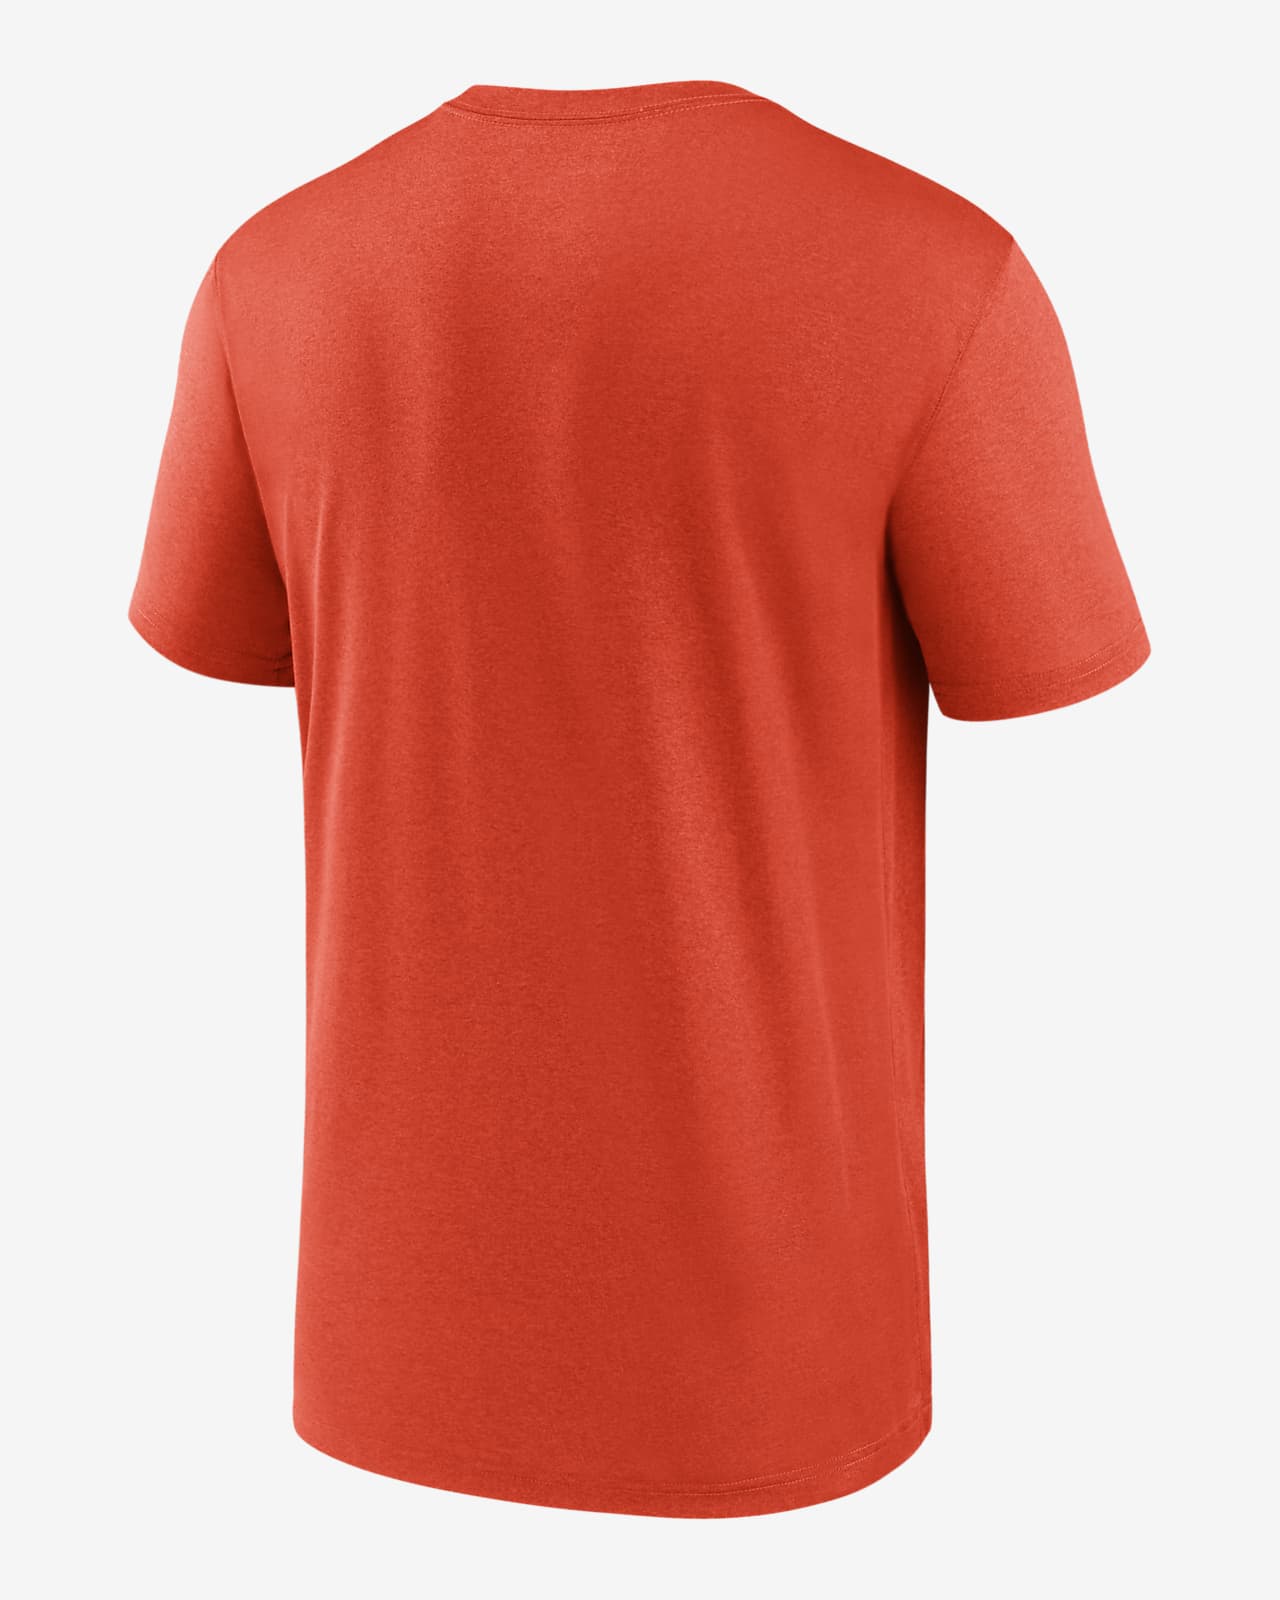 Nike Dri-FIT Logo Legend (NFL Cleveland Browns) Men's T-Shirt